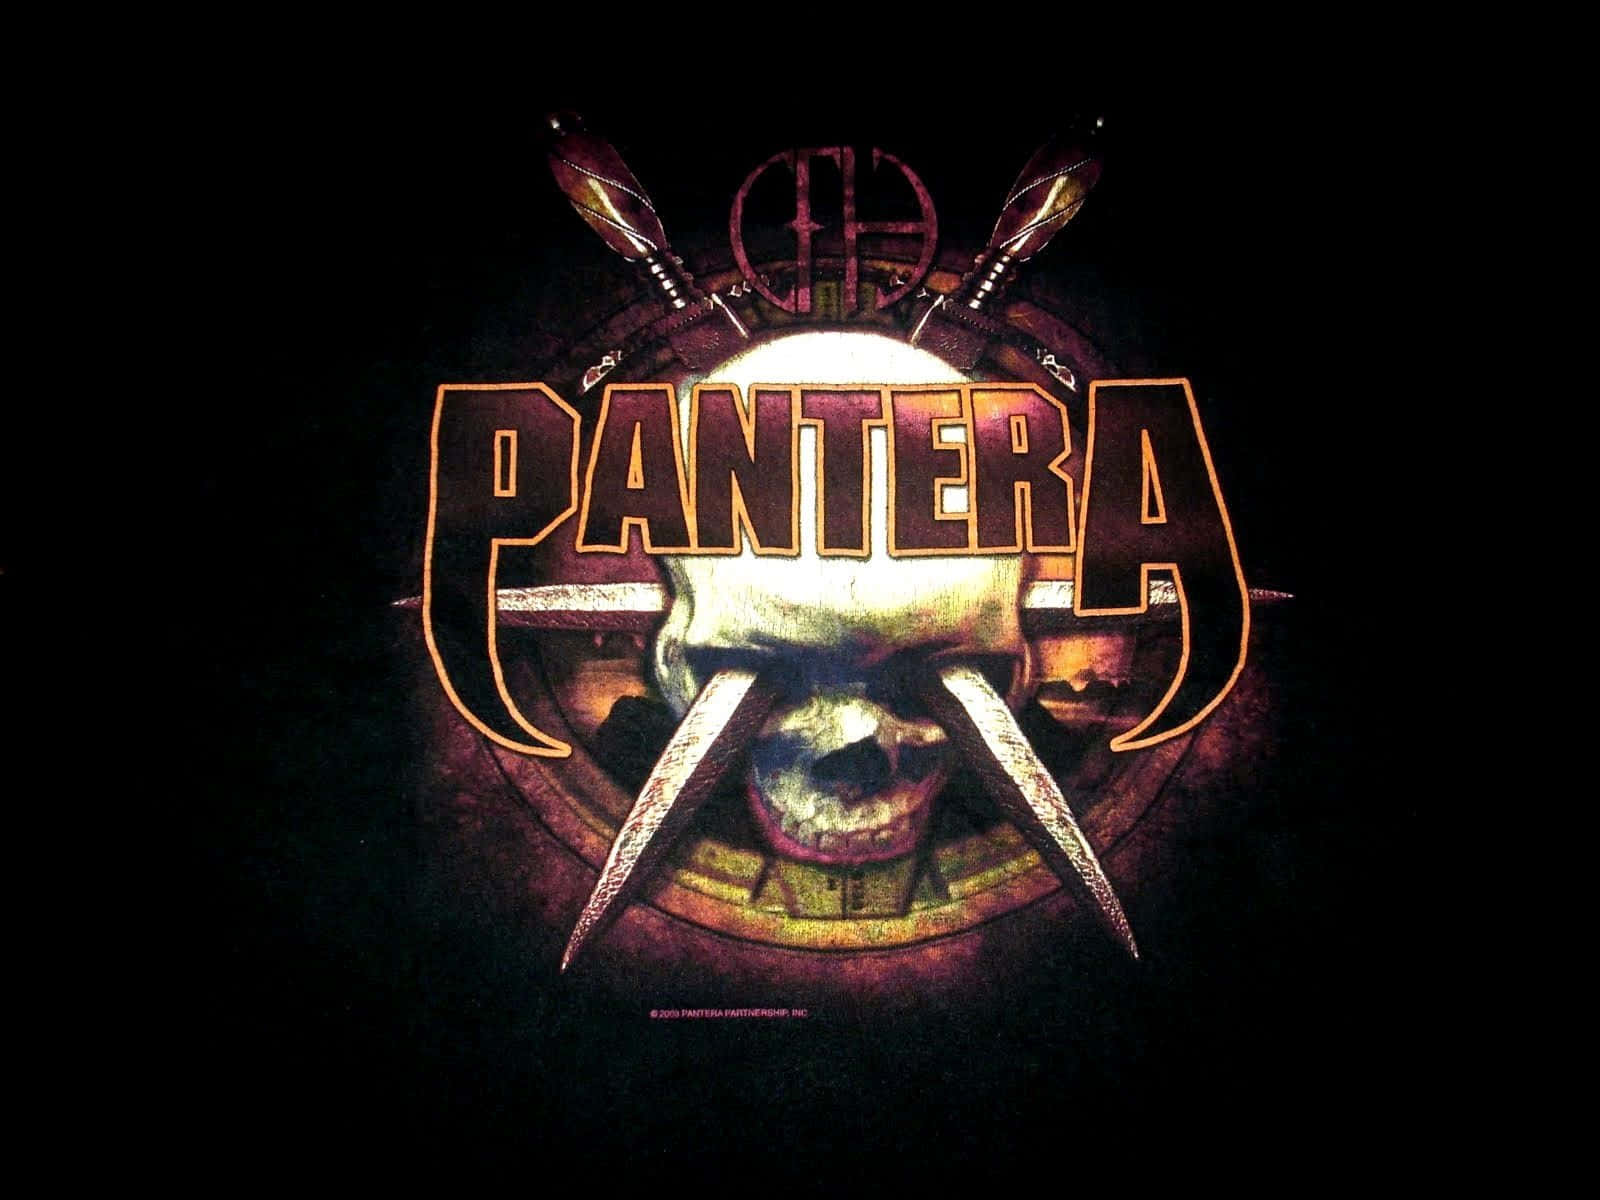 Heavy metal band Pantera at their peak. Wallpaper